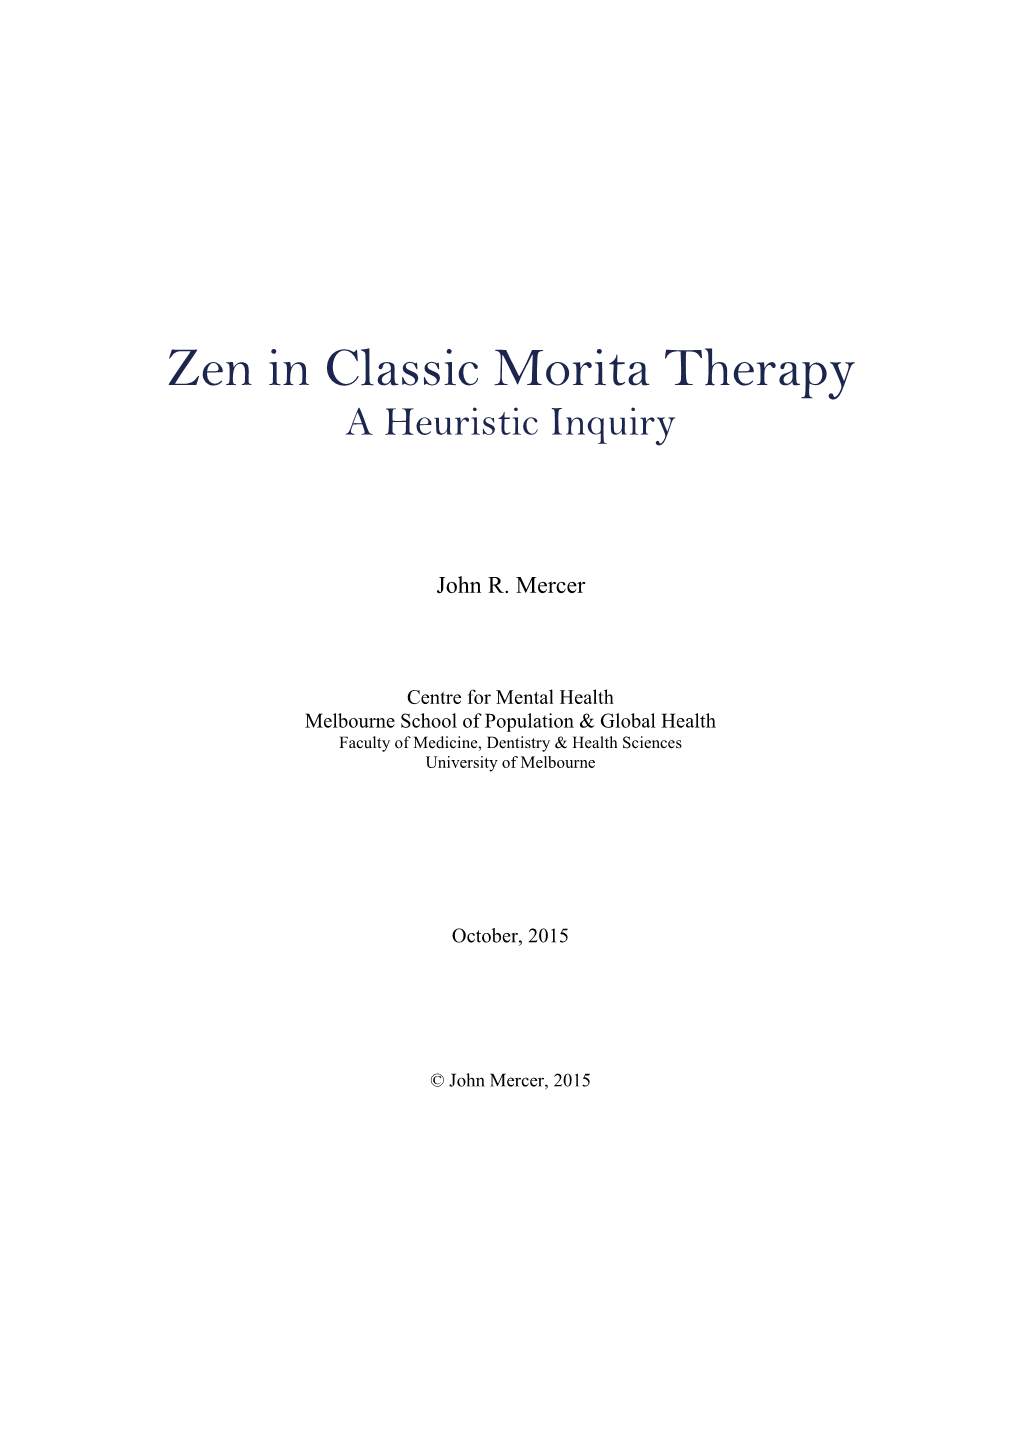 Zen in Classic Morita Therapy a Heuristic Inquiry